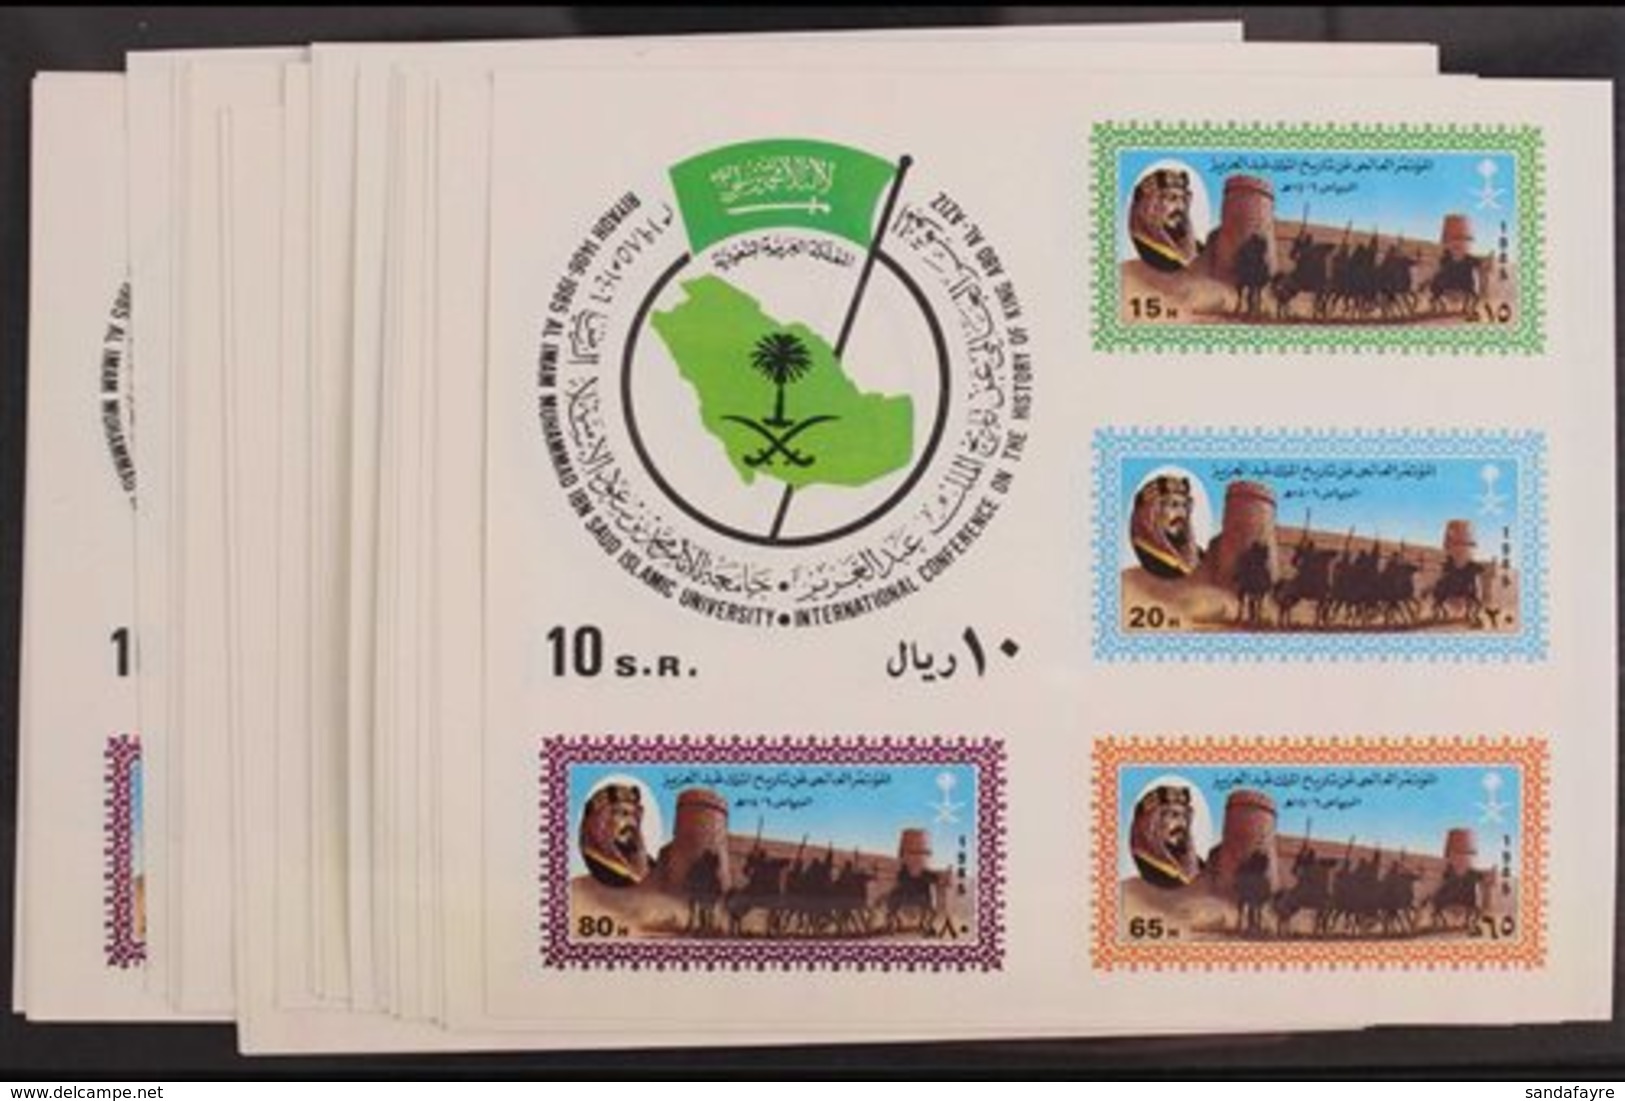 1985 International Conference On King Abdulaziz Miniature Sheets, SG MS1429, Superb Never Hinged Mint Hoard Of Twenty Fi - Arabia Saudita